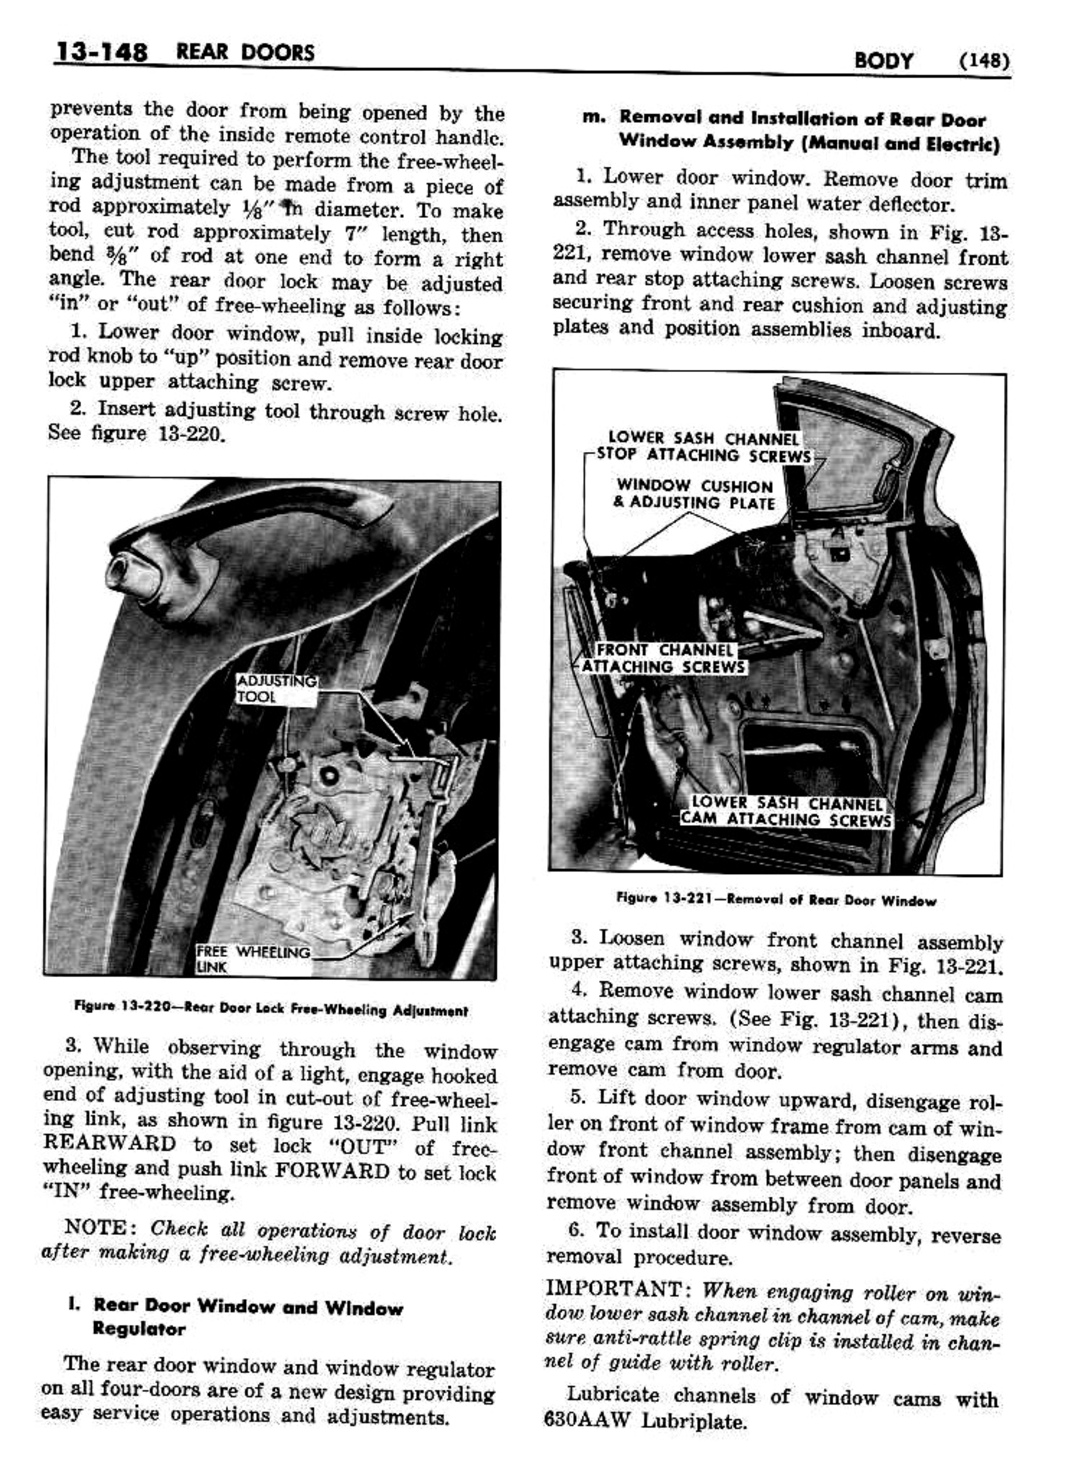 n_1958 Buick Body Service Manual-149-149.jpg